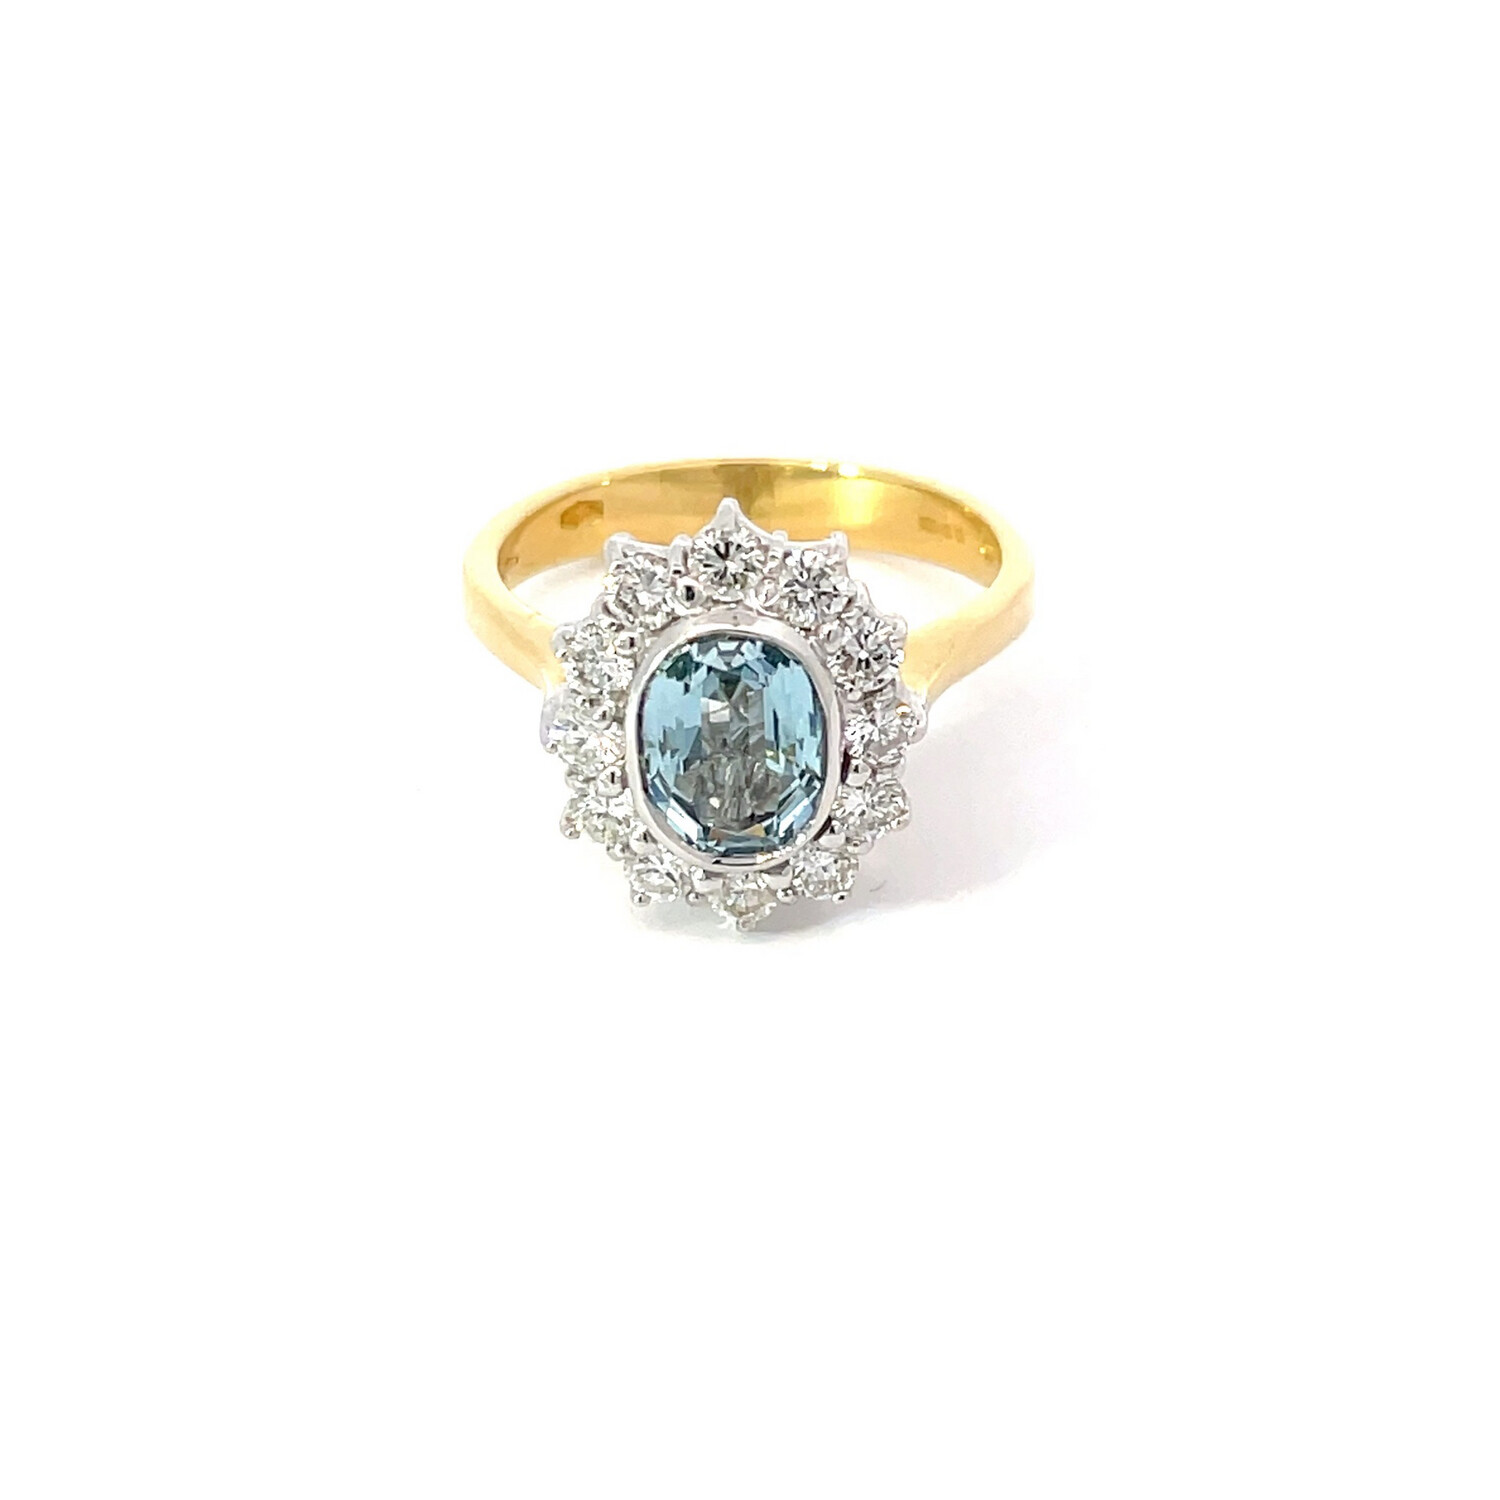 Aquamarine and Diamond Ring, Size N